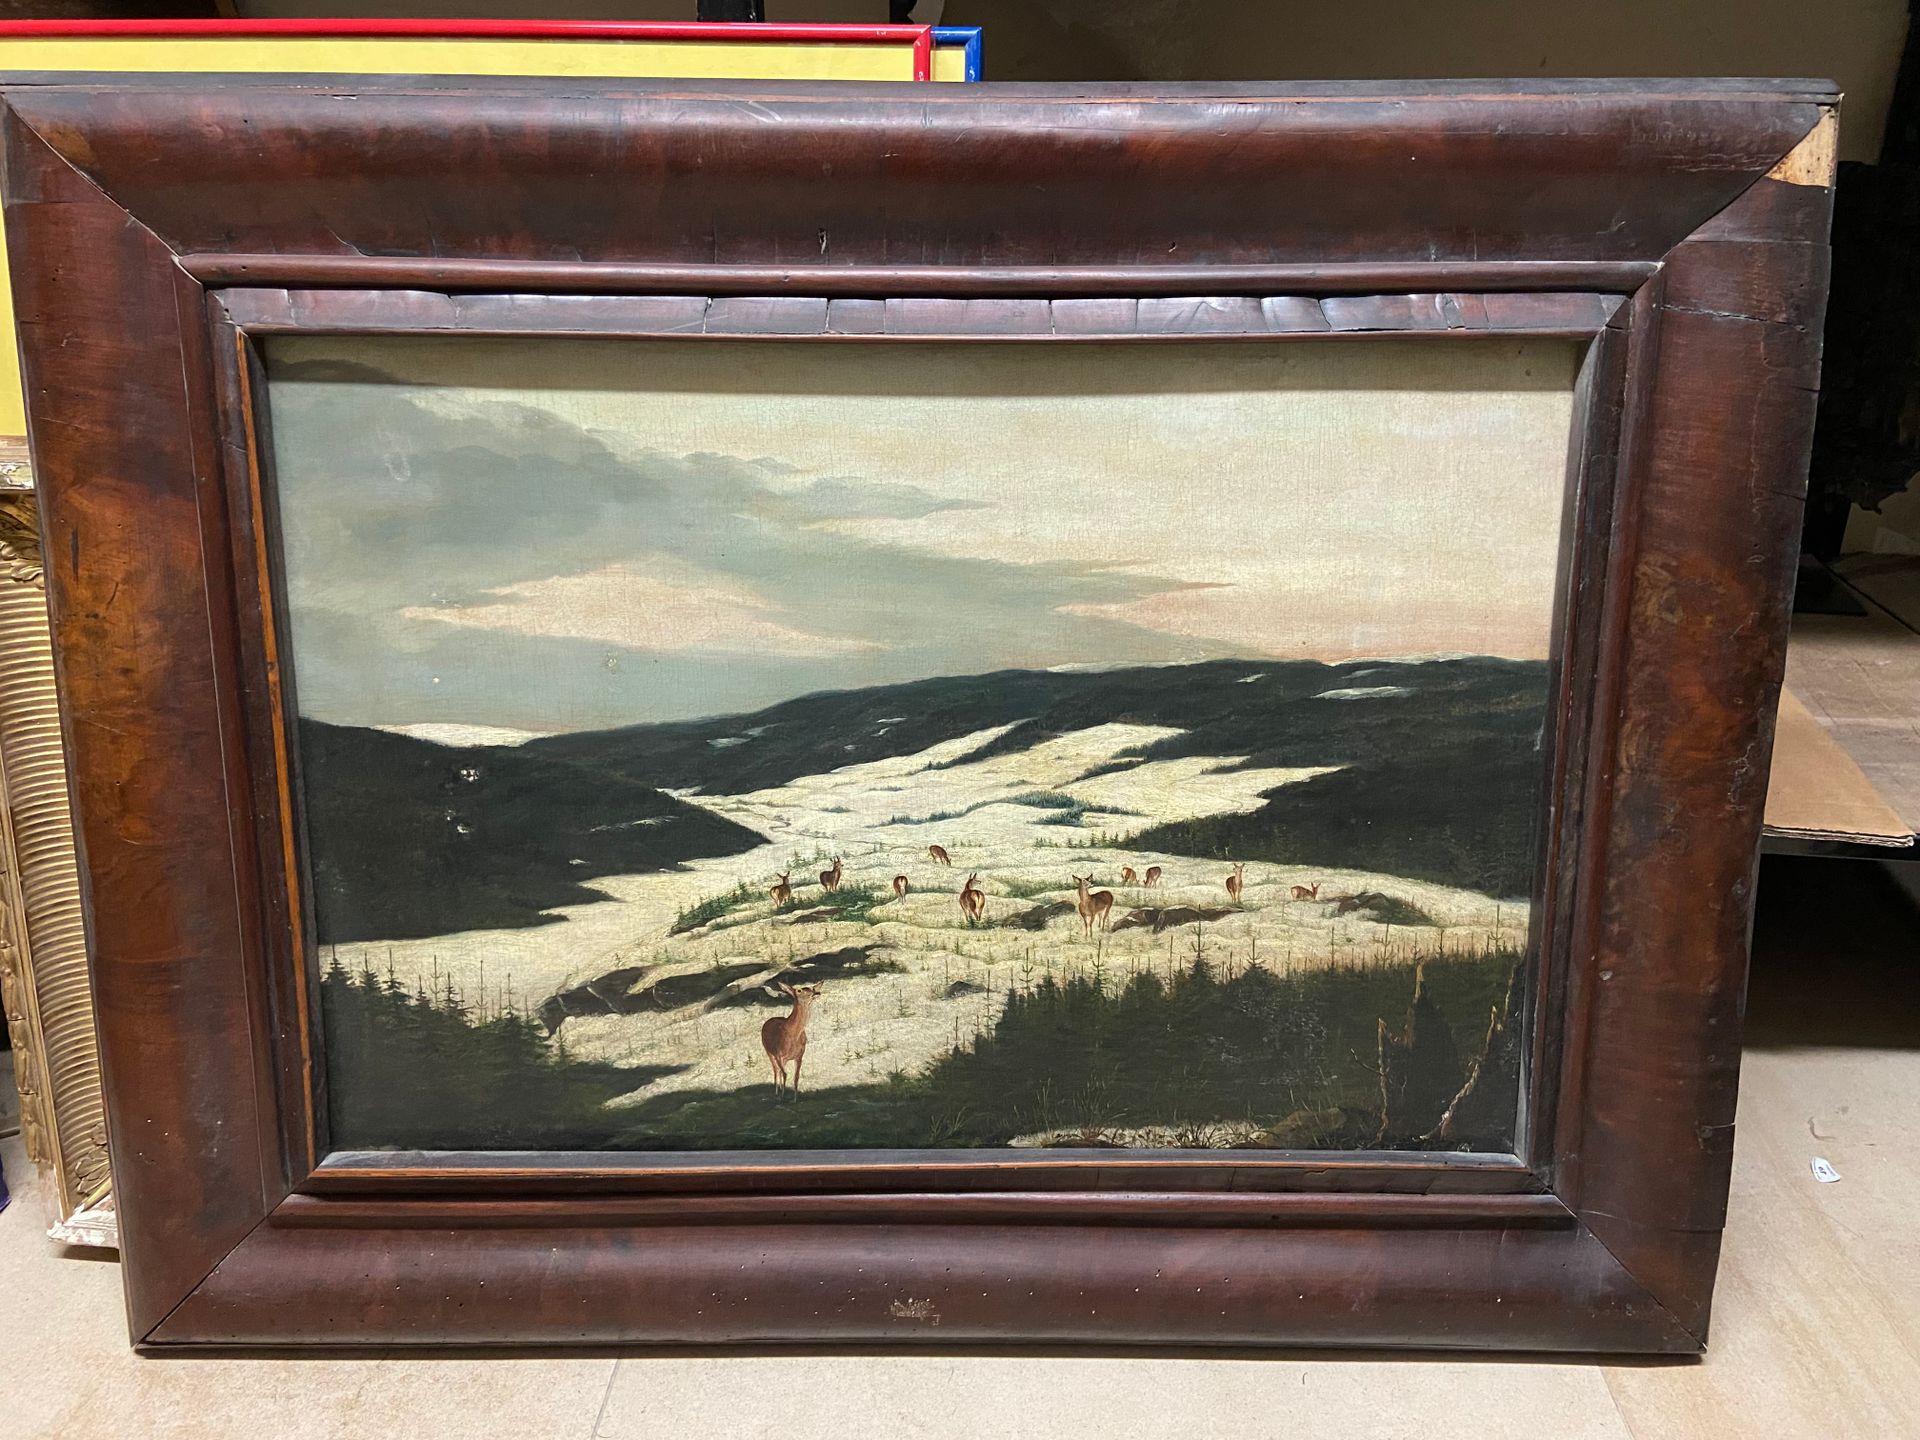 Null 英语学校

雪地里的小鹿

布面油画

50 x 73厘米

深色木框